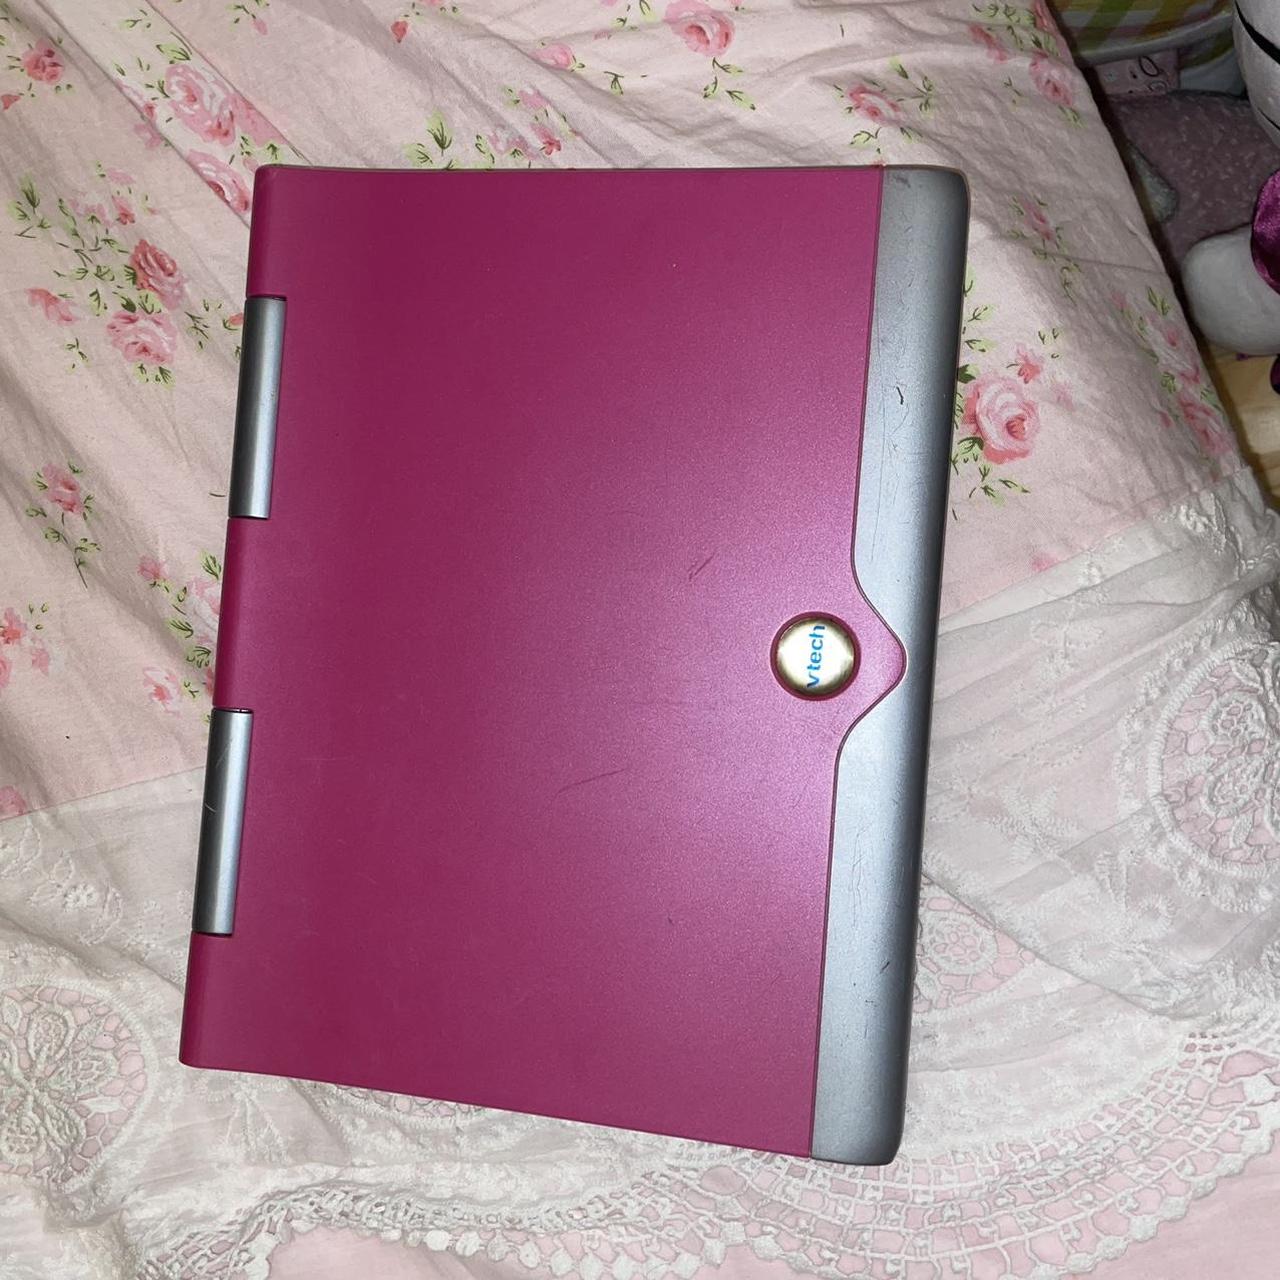 V tech nitro notebook pink colored No idea if works - Depop